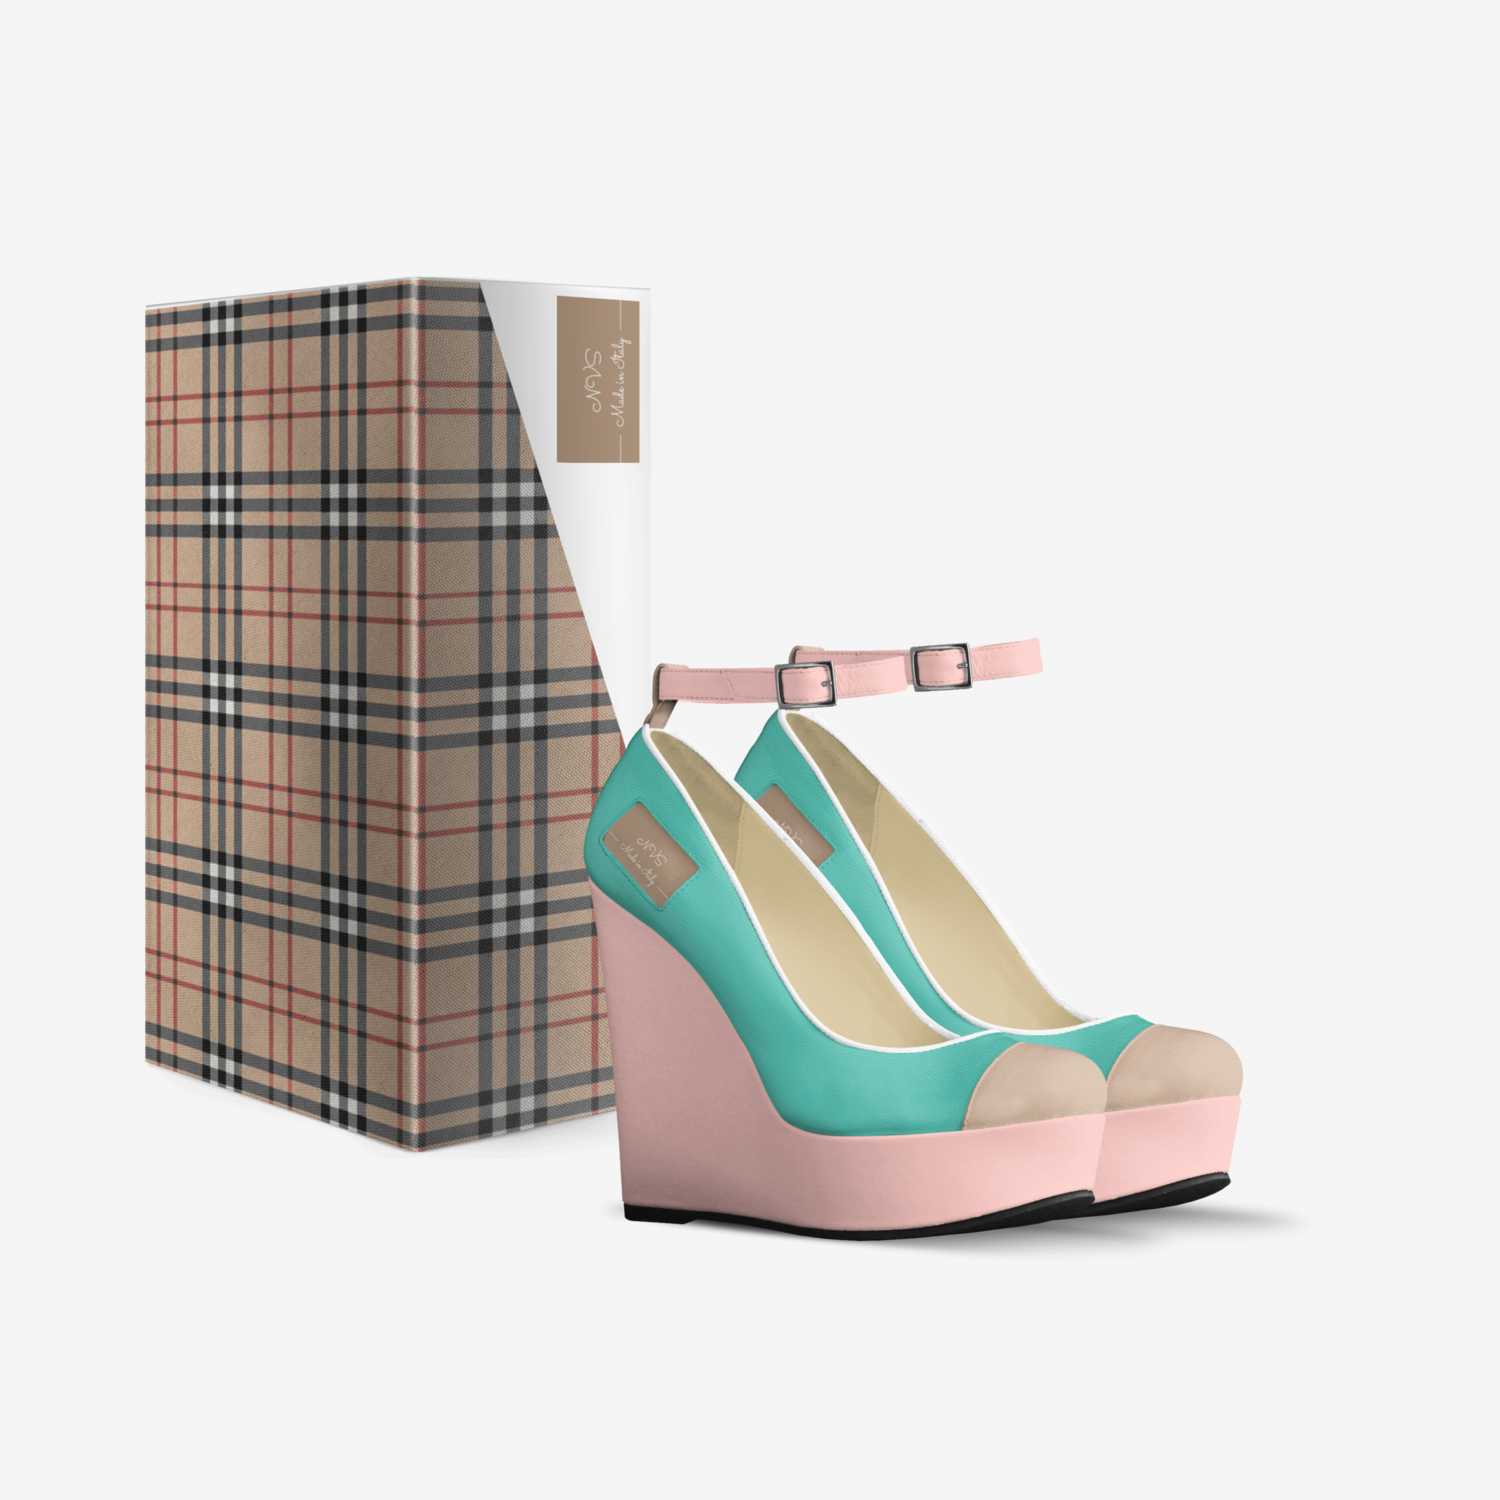 NVS custom made in Italy shoes by Natasha Visalli | Box view